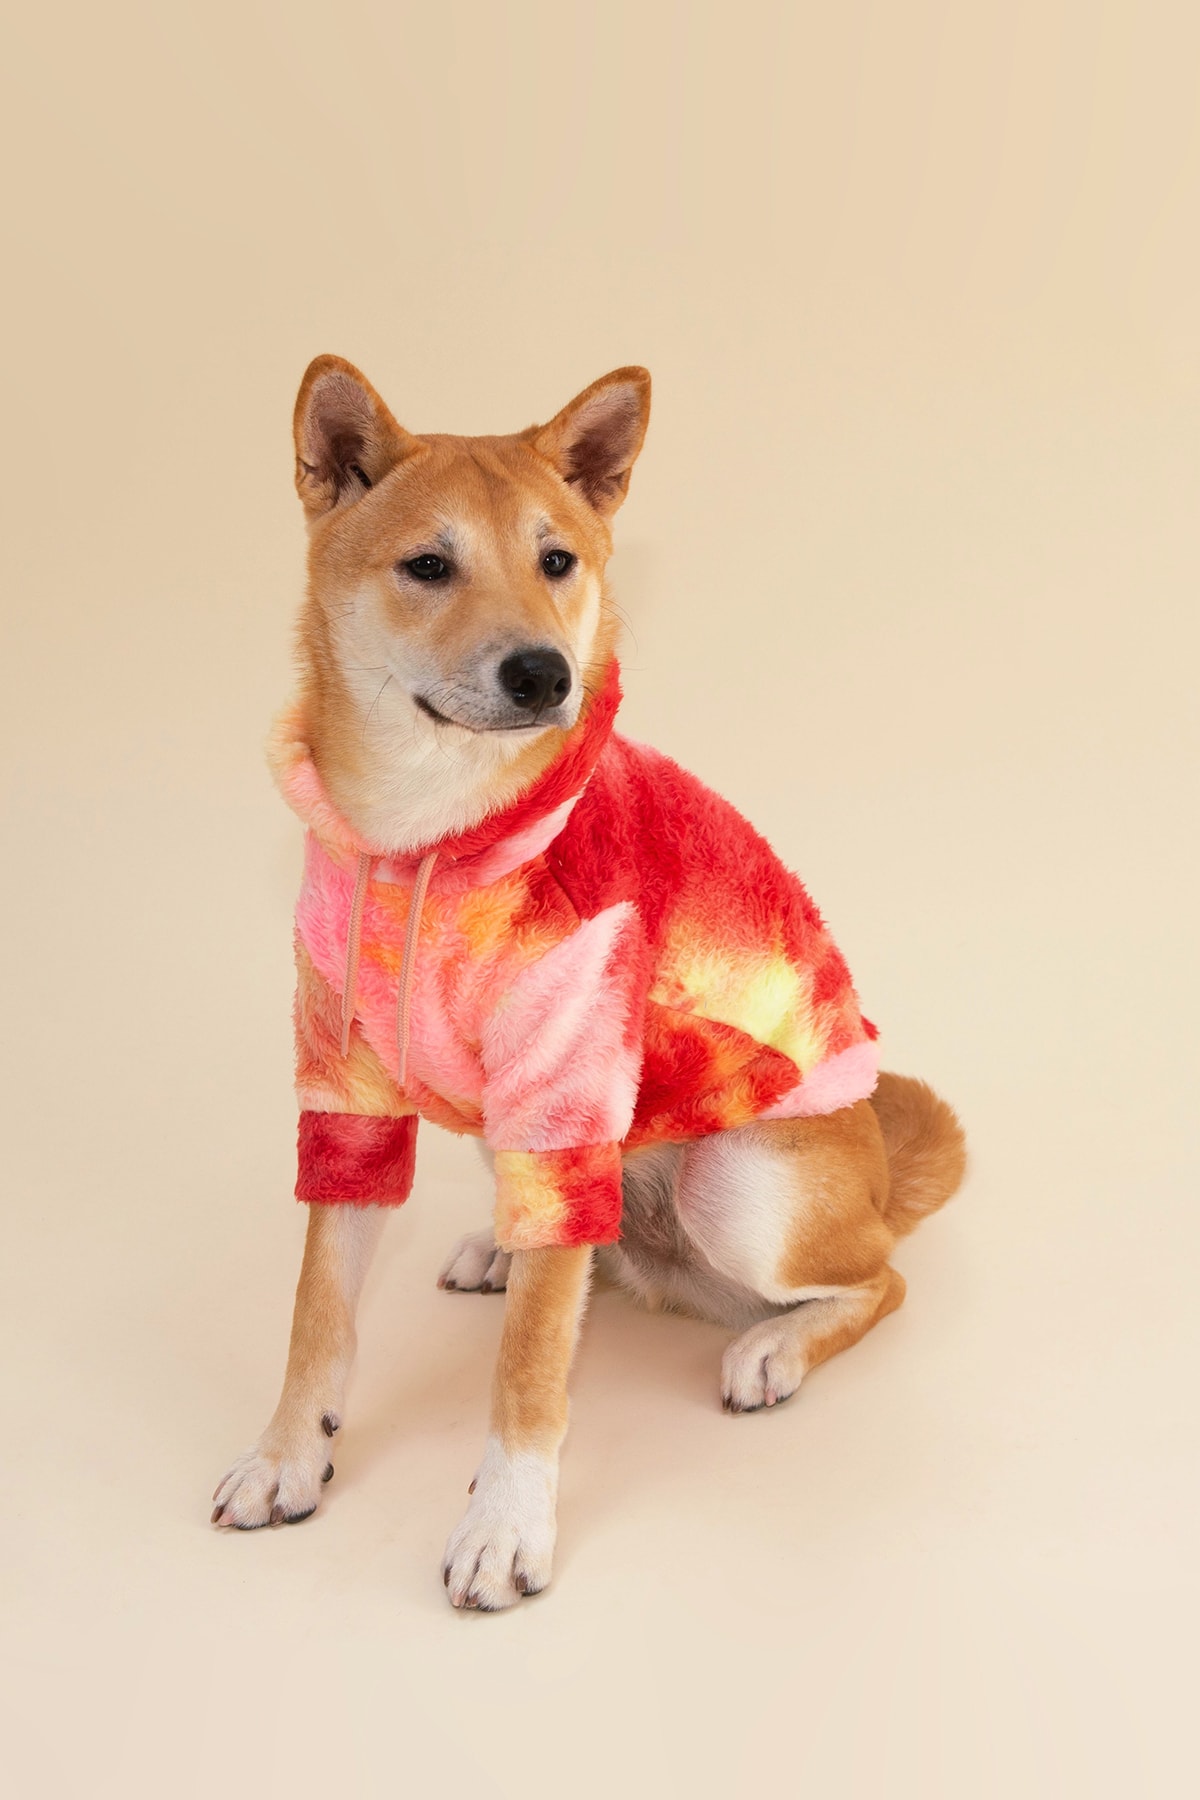 Little Beast Dog Clothing Sweater Hoodie Tie-Dye